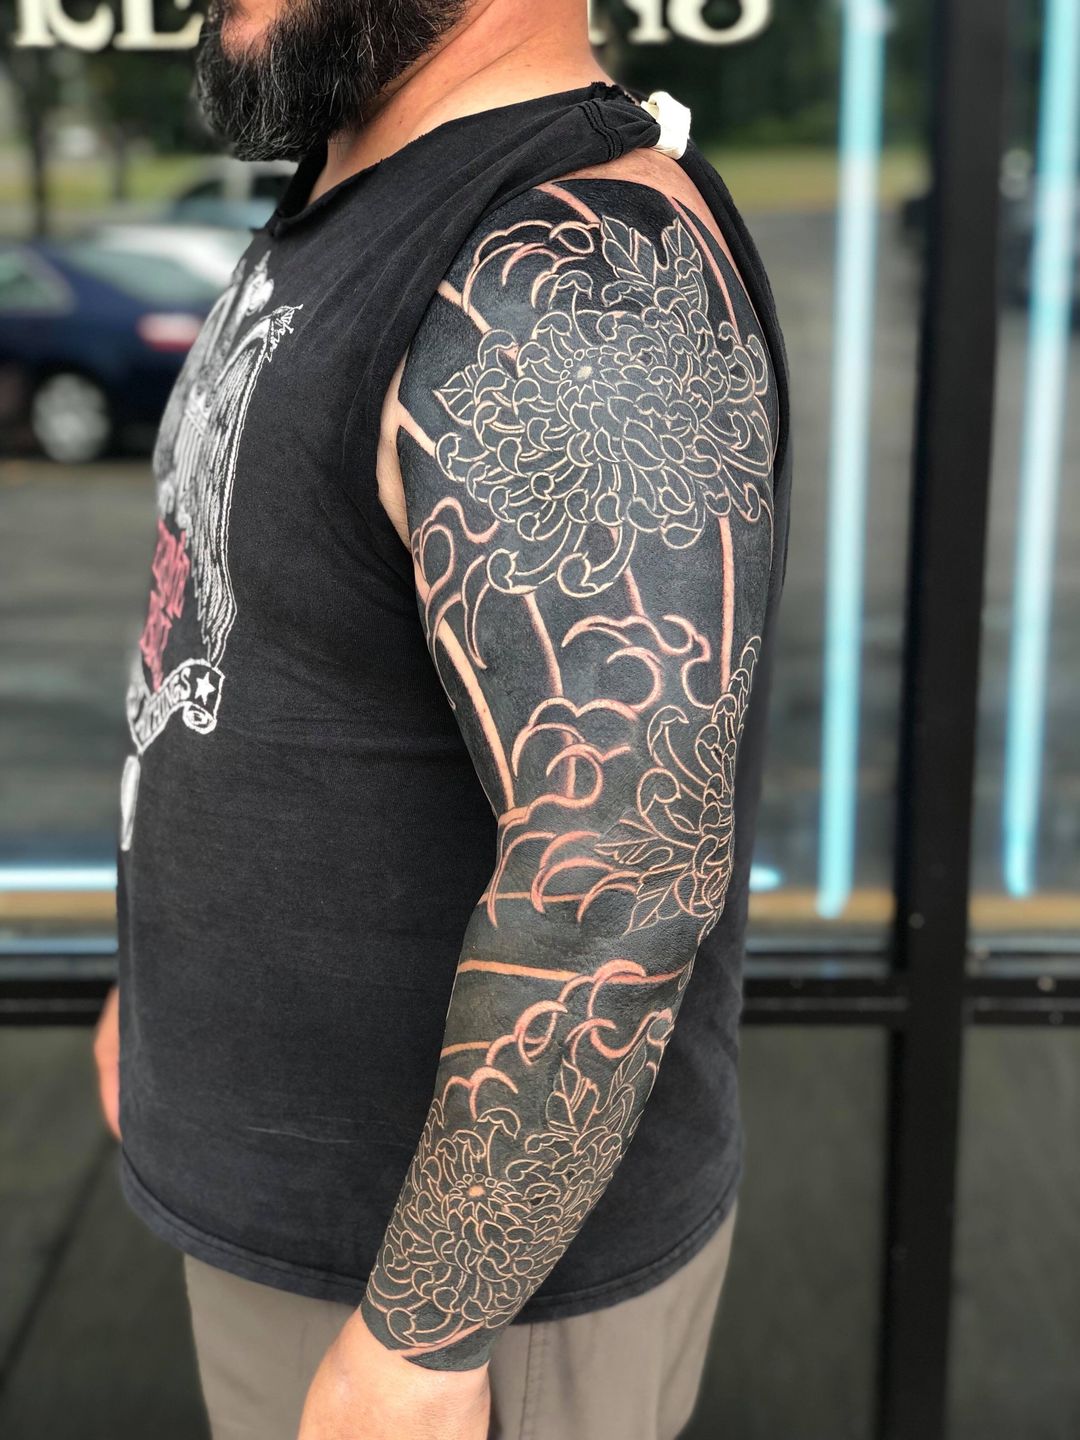 Tattoo tagged with flower japanese sleeve  inkedappcom